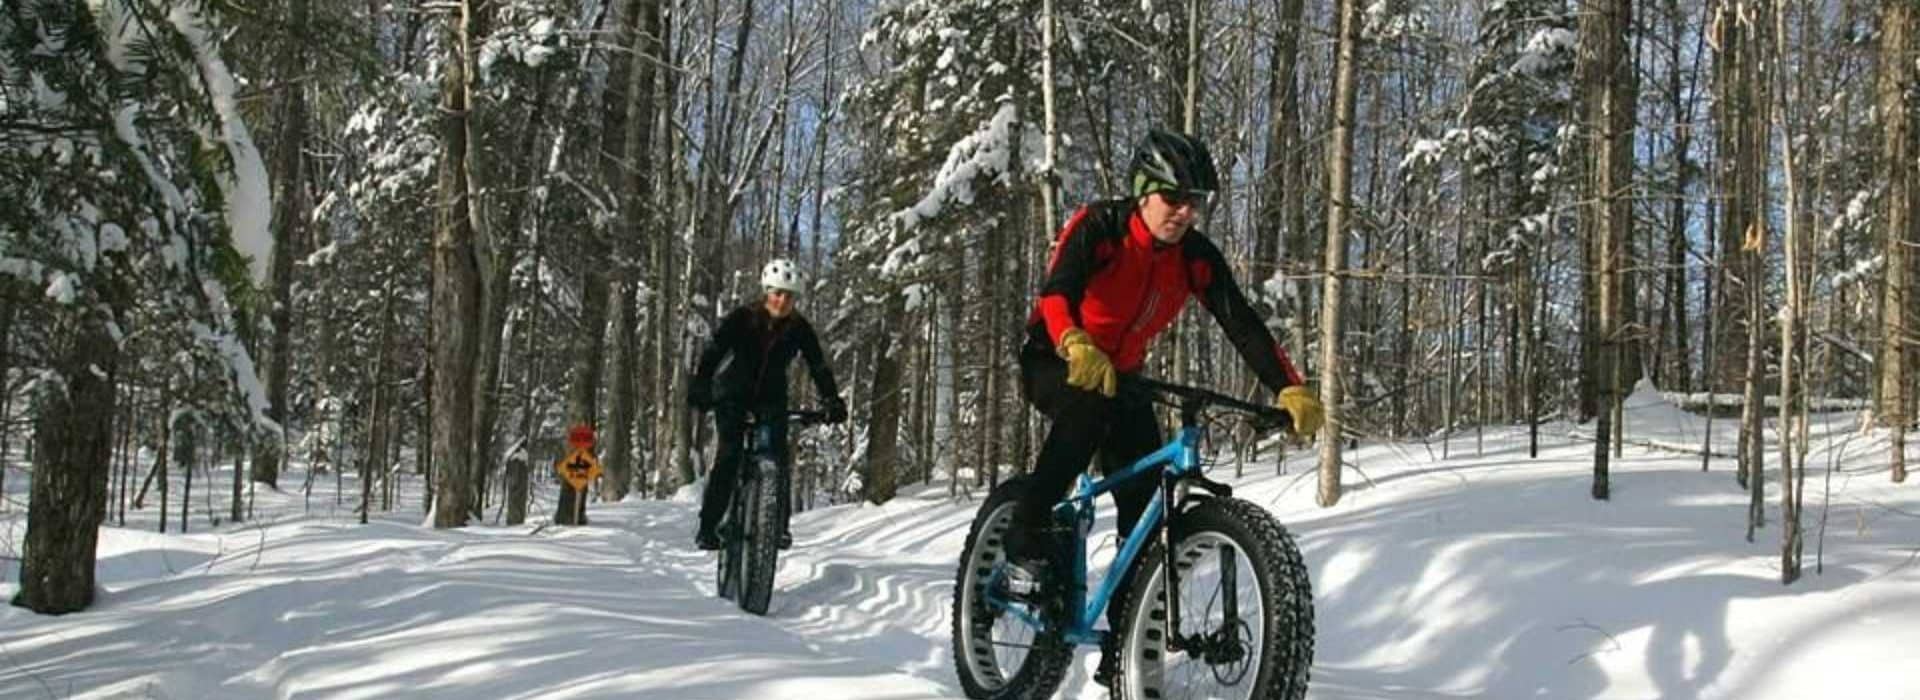 Kingdom Trails fat biking & cross country ski trails|two fat bikers and a cross country skier at kingdom trails|3 winter fat bikiers at Kingdom Trails Fat Biking & Cross Country Ski center